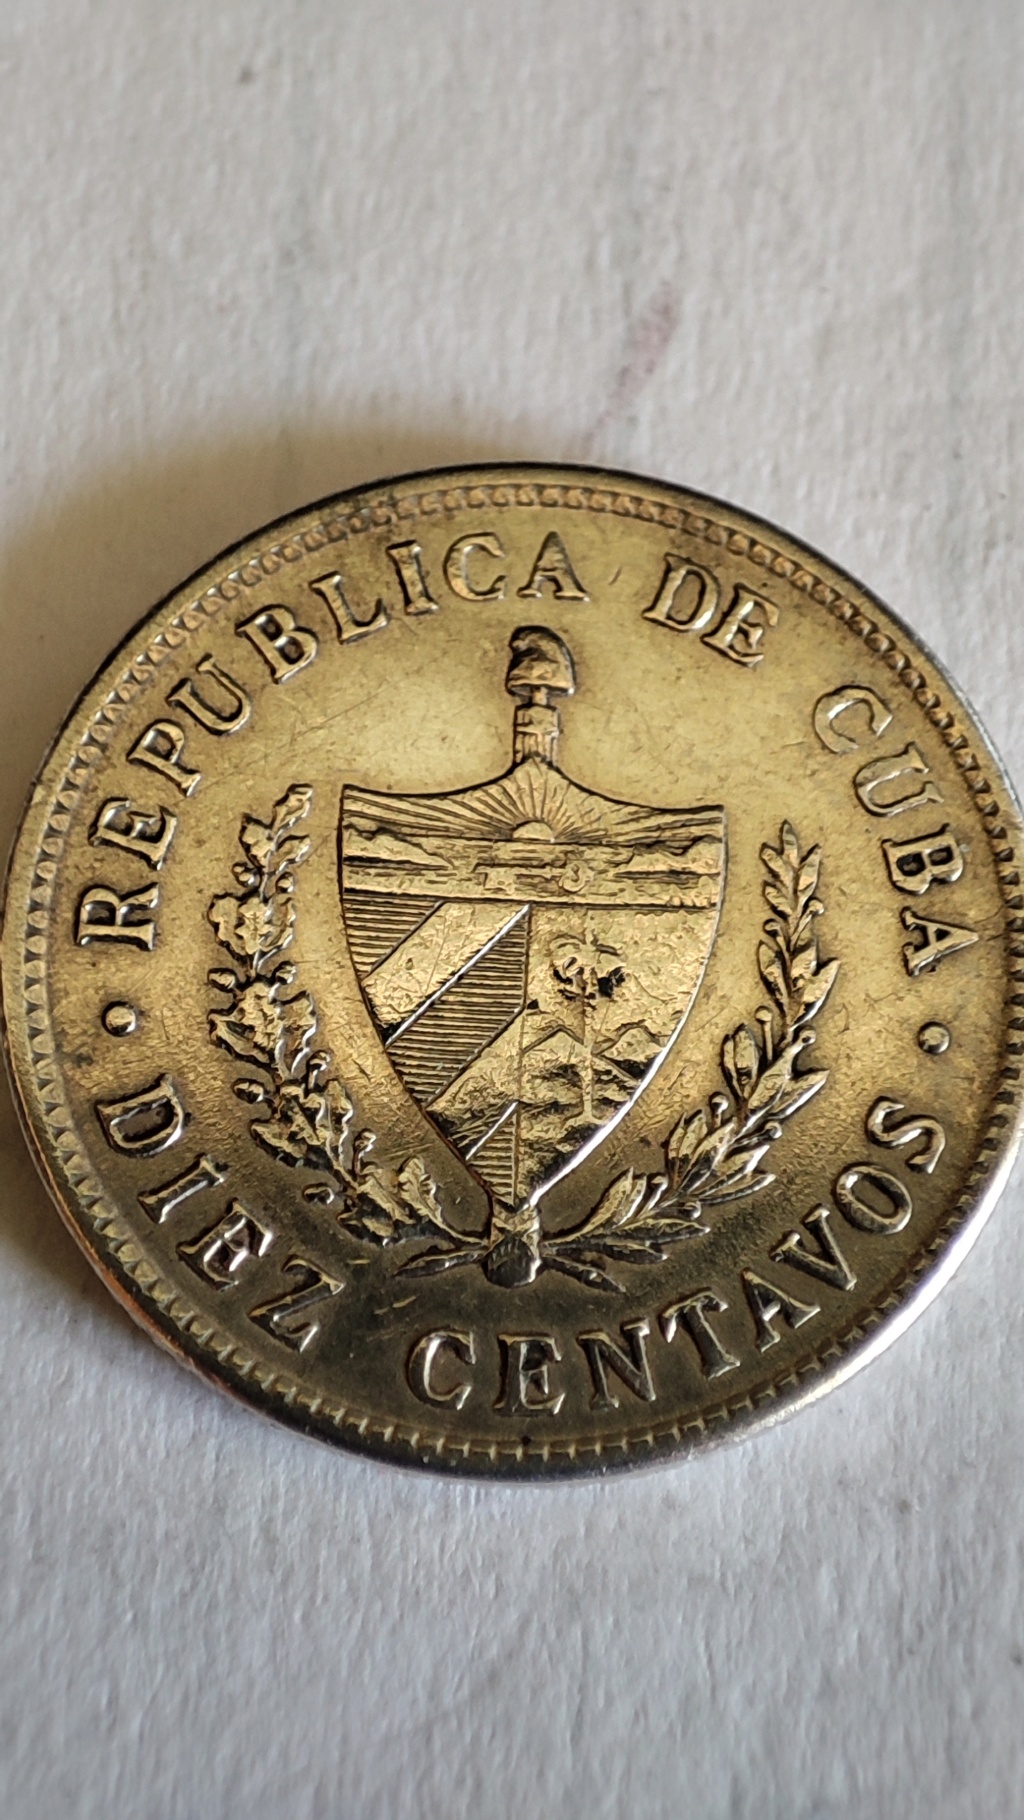 Cuba 10 centavos 1920 16440615